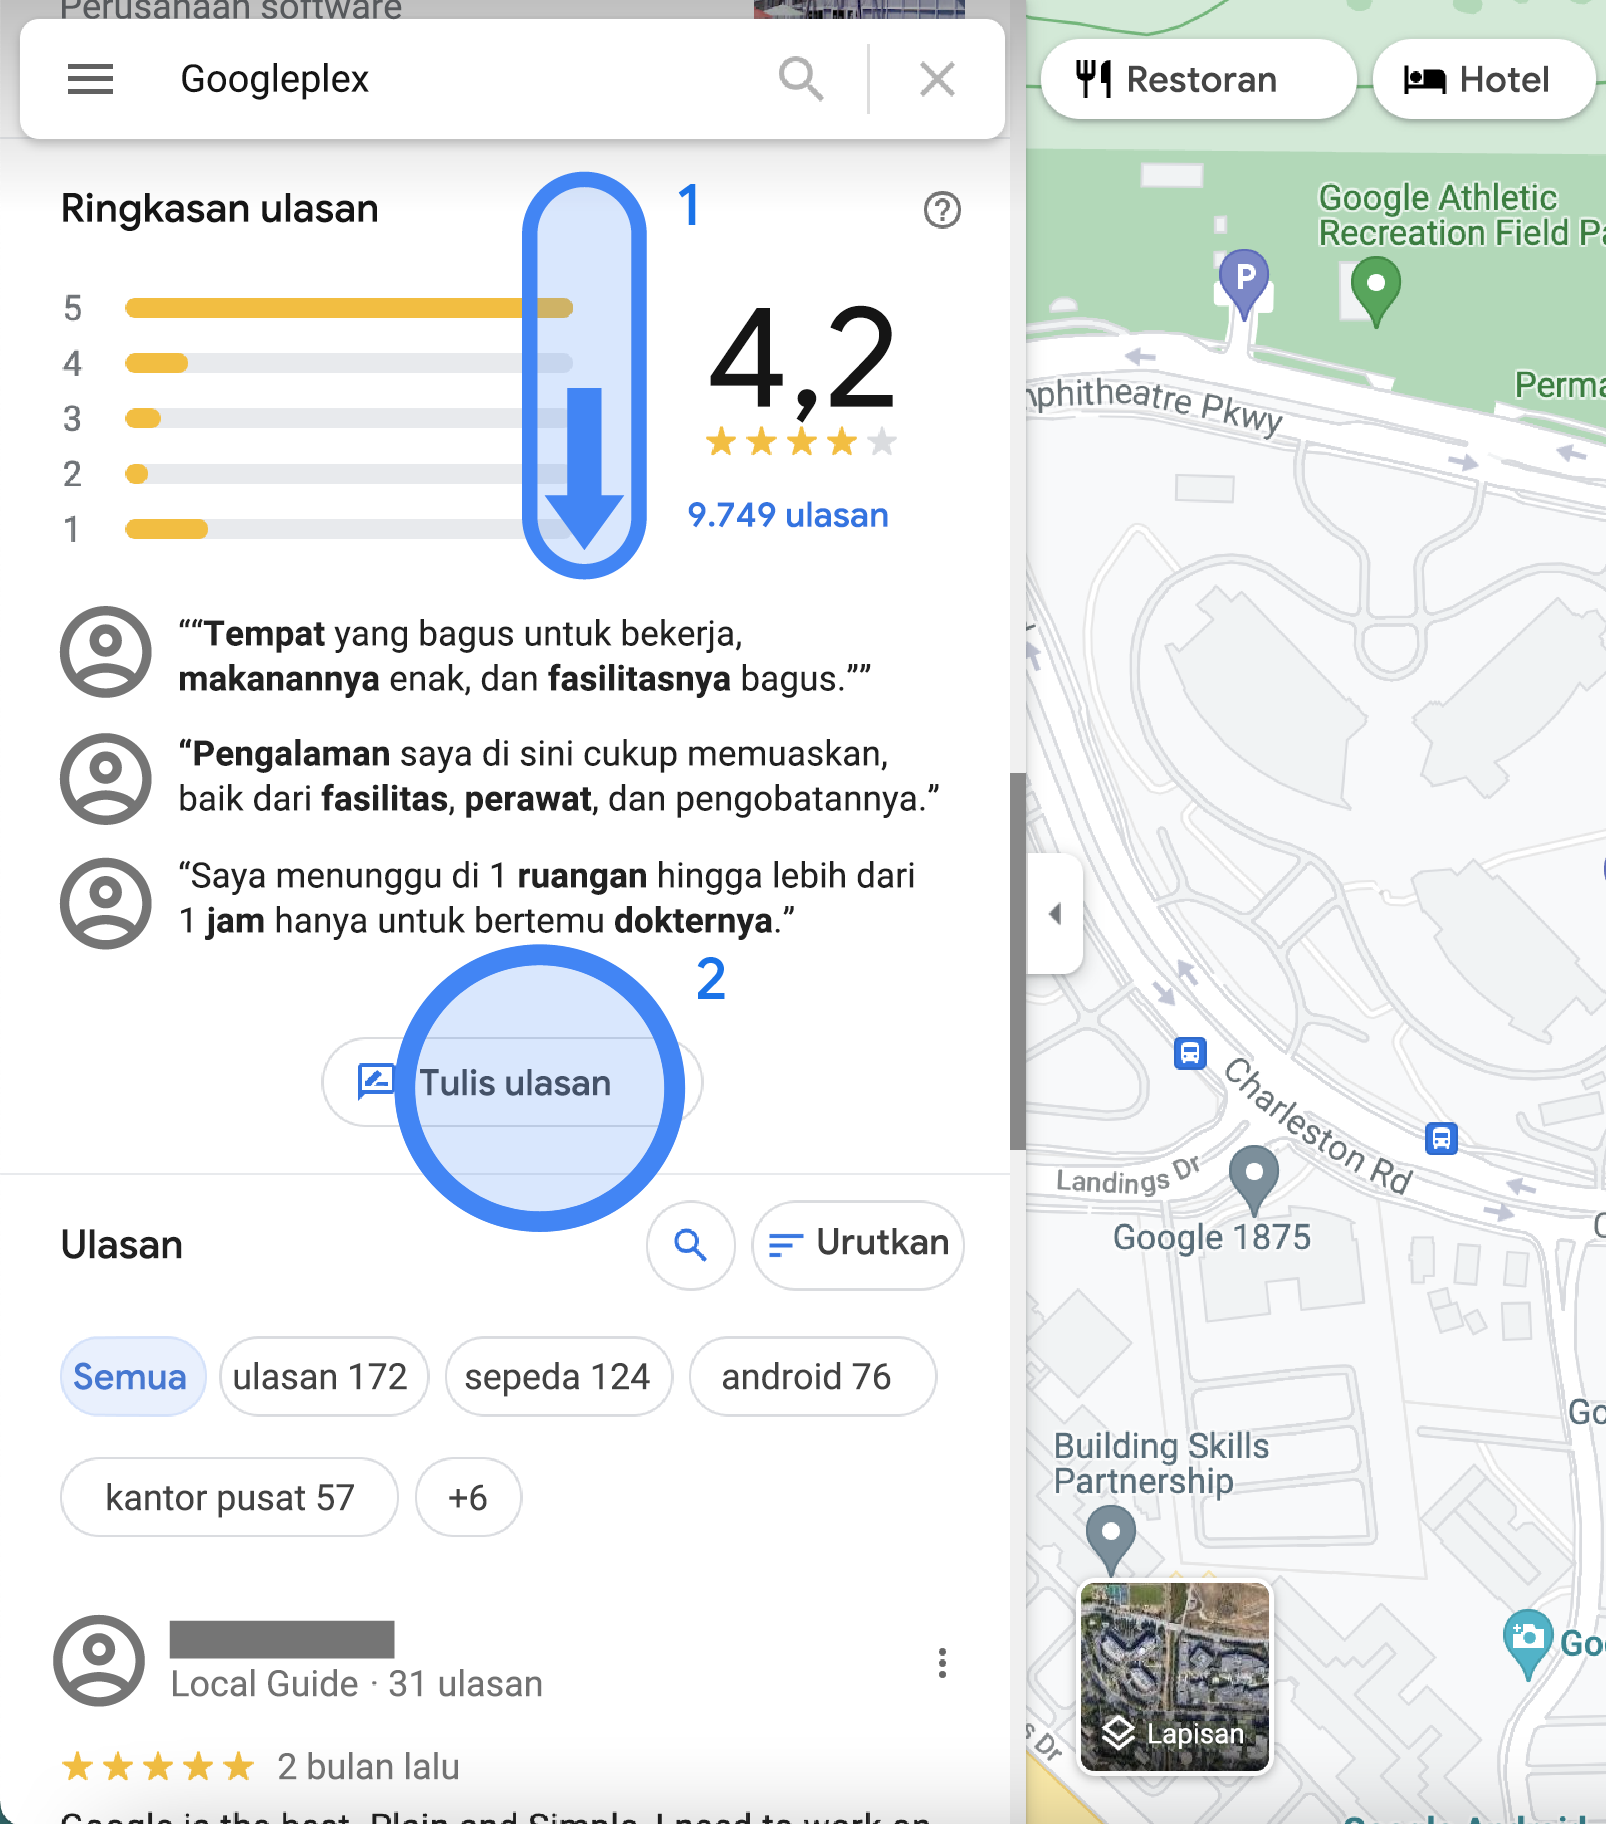 Di Google Maps, ringkasan ulasan lokasi Googleplex ditampilkan di sidebar kiri. Laporan tersebut menunjukkan rating ulasan rata-rata, ulasan yang disorot, tombol yang bertuliskan "Tulis ulasan", dan daftar semua ulasan.